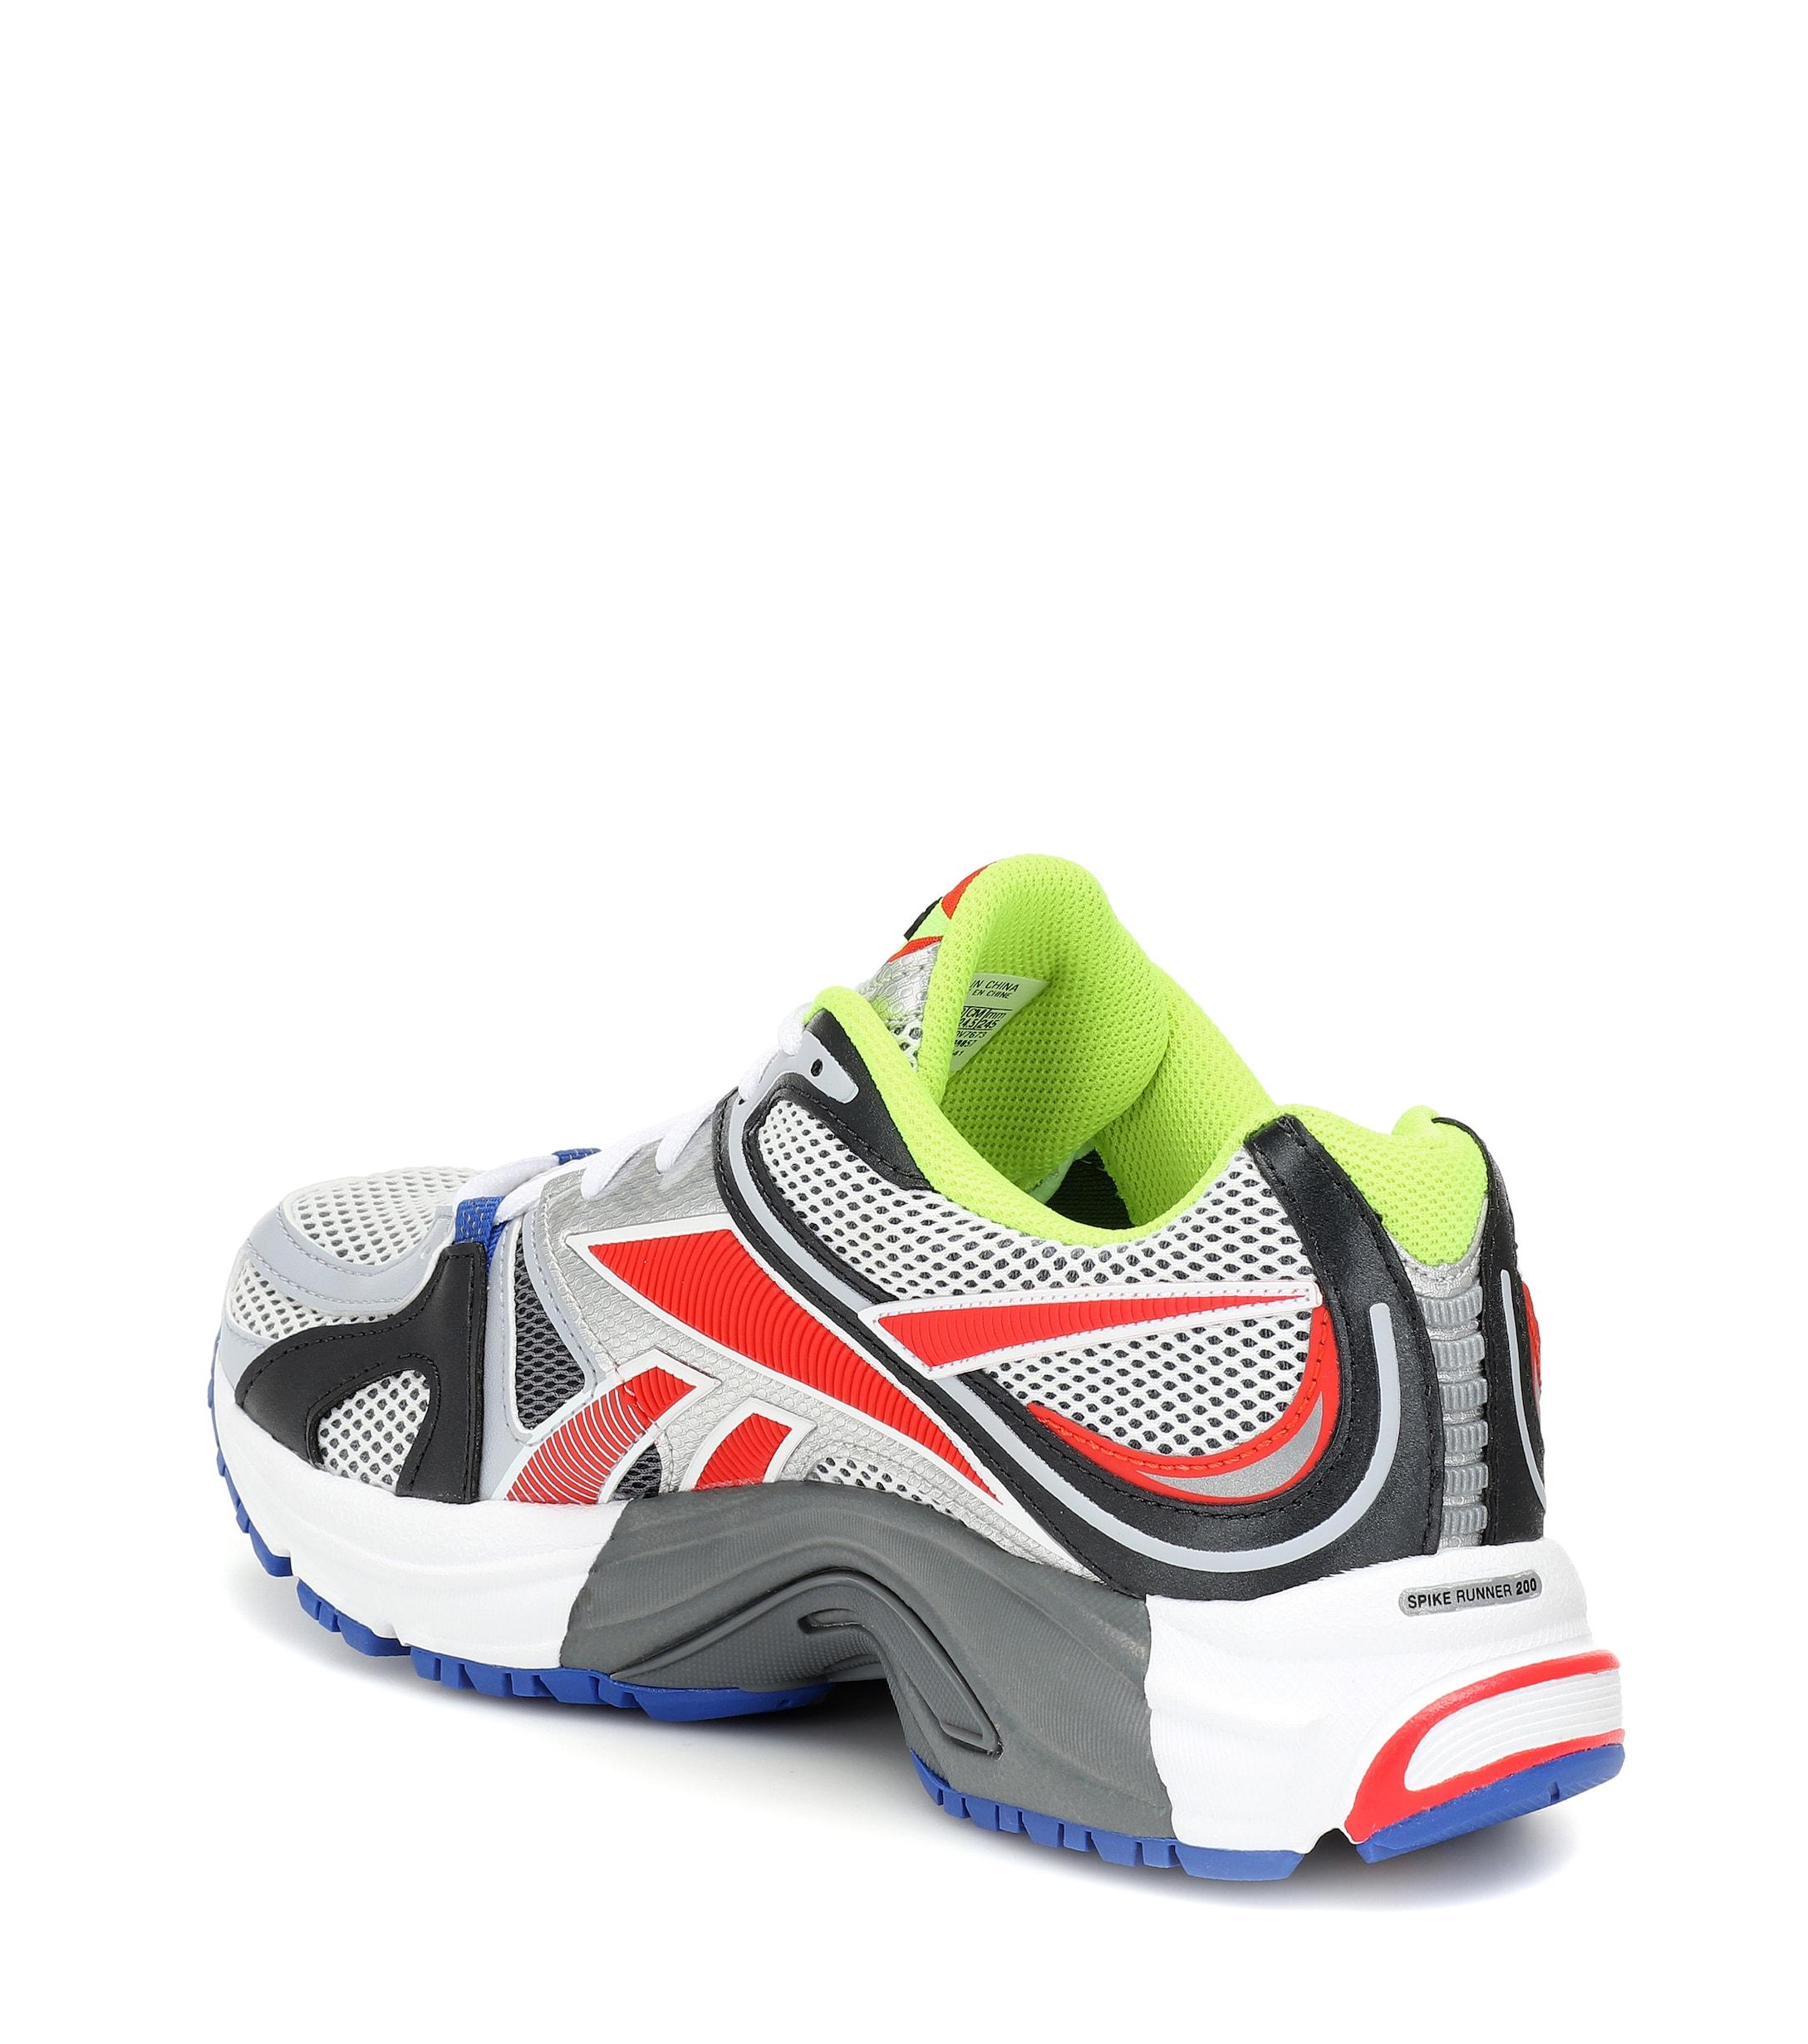 Vetements X Reebok Spike Runner 200 Sneakers | Lyst